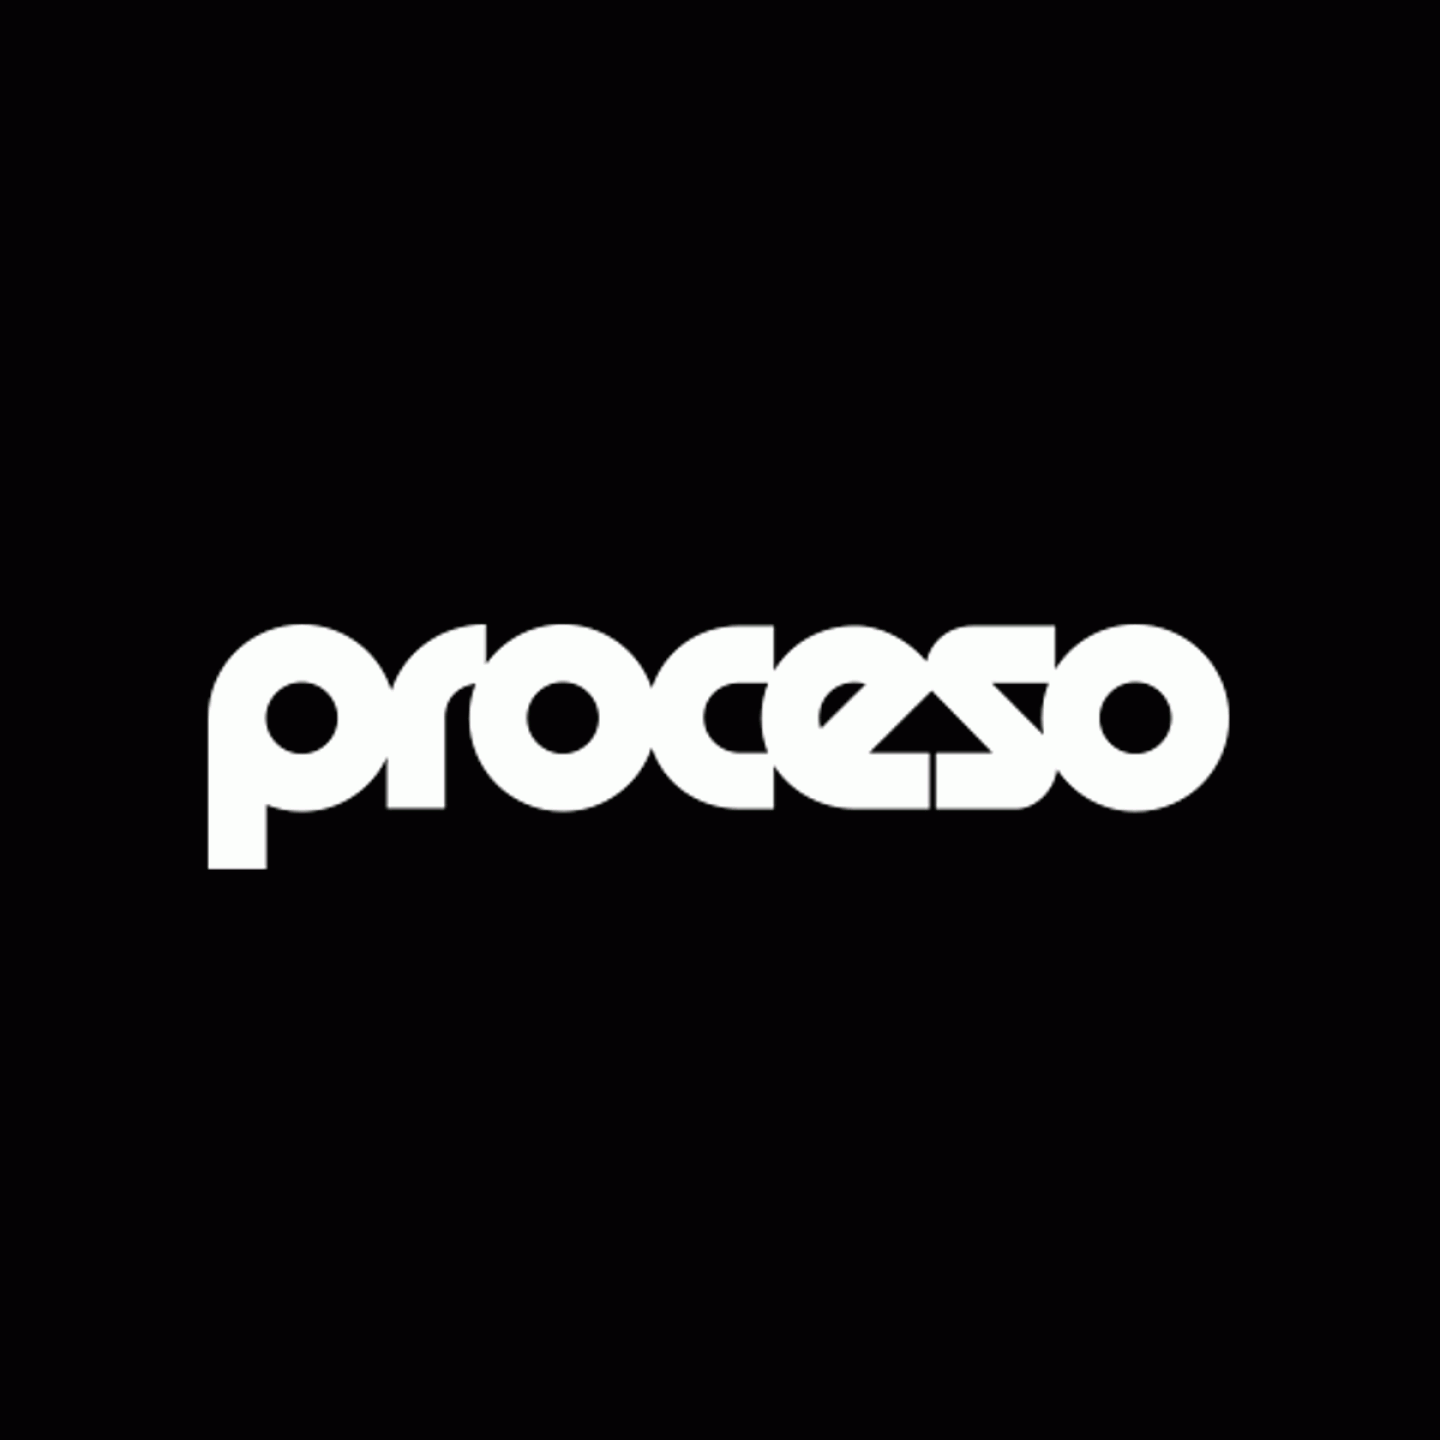 proceso-logo-512x512